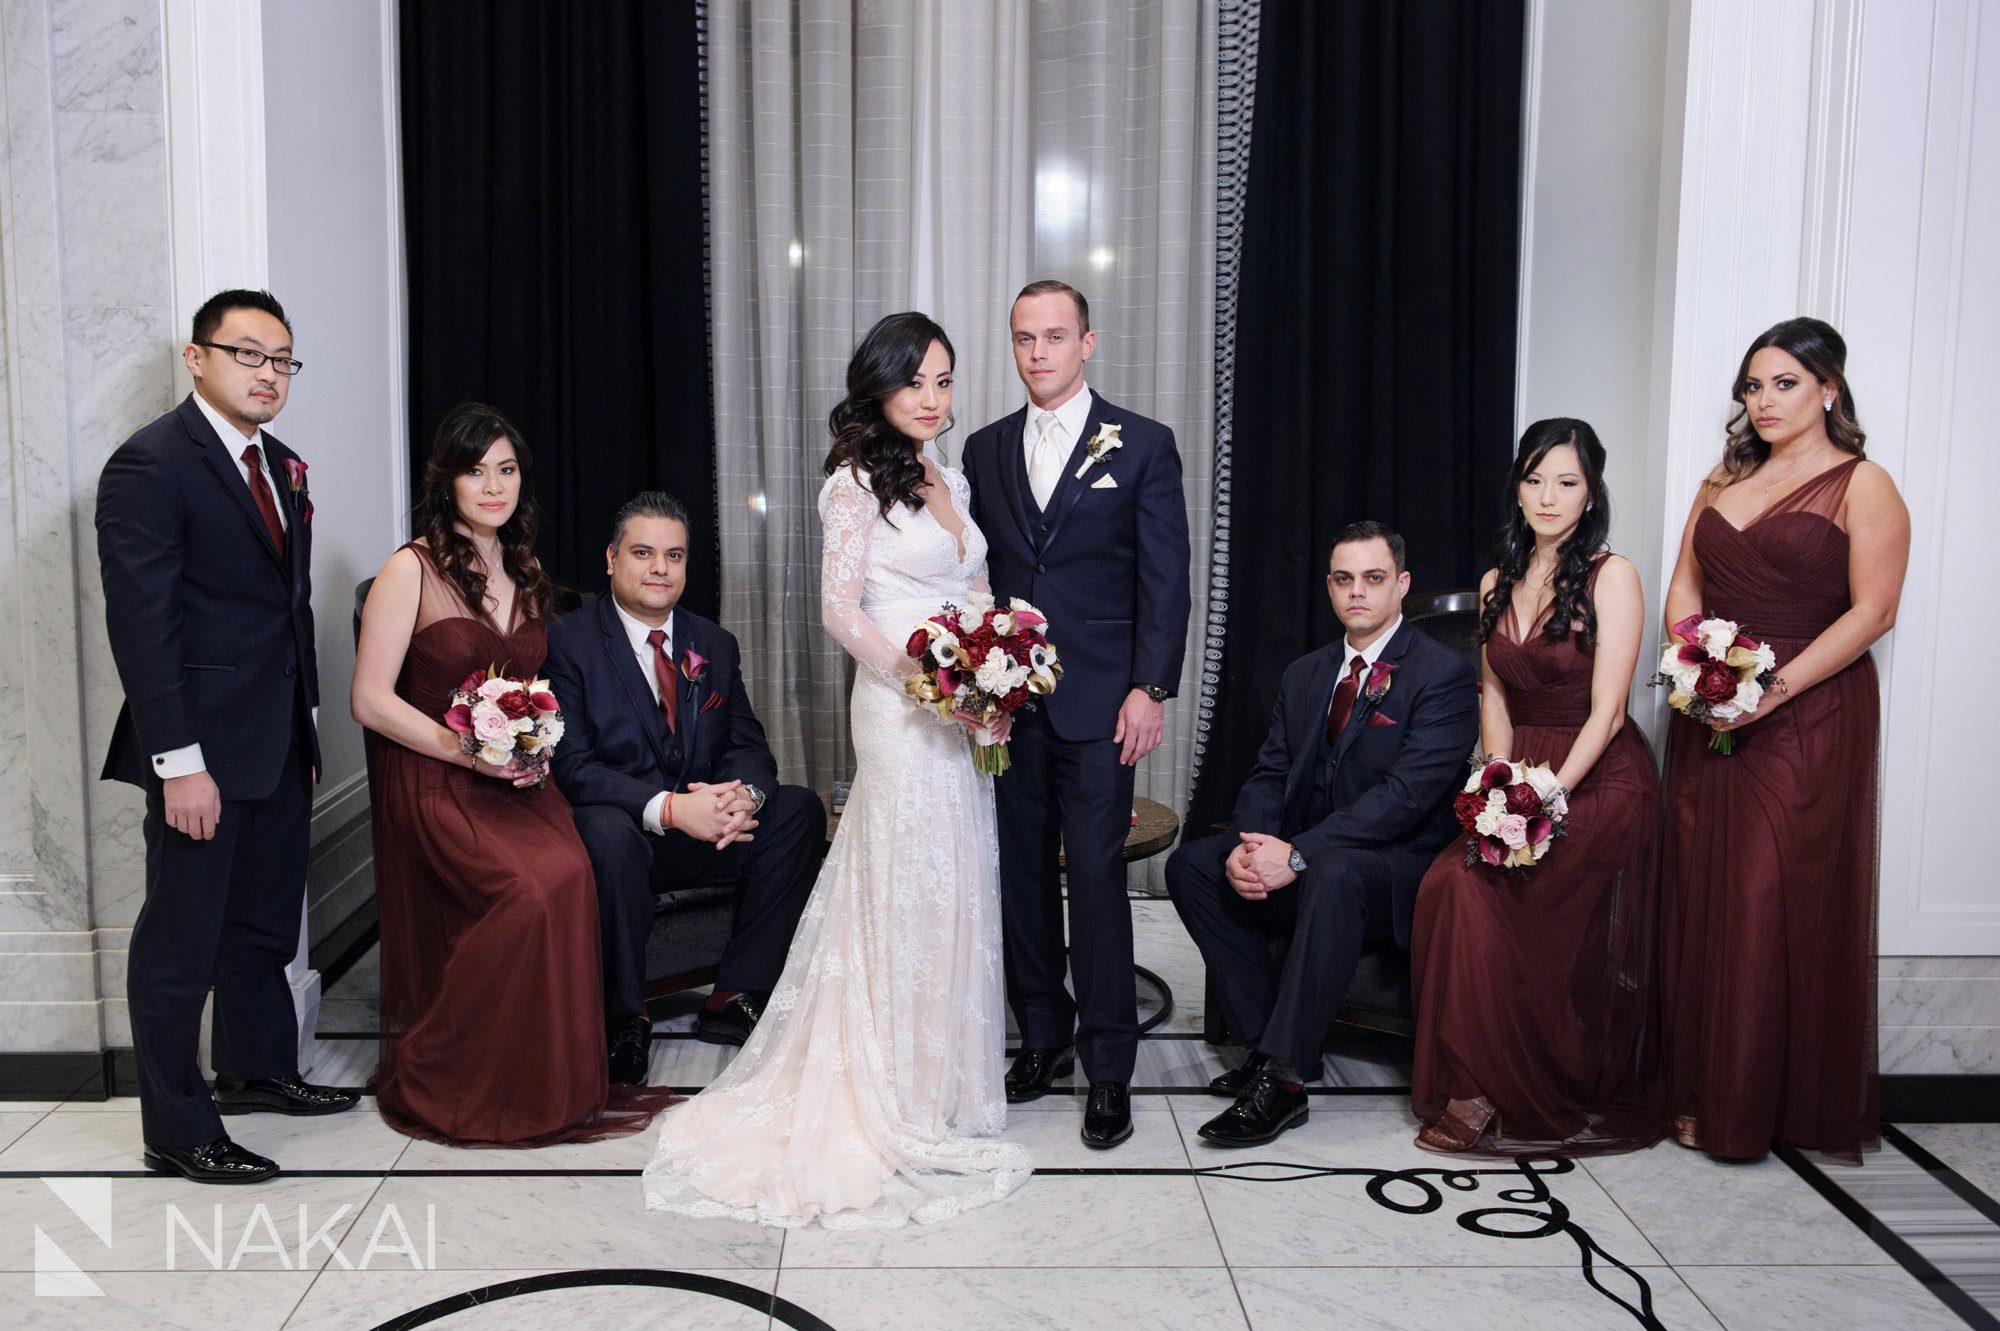 chicago waldorf wedding photographer bride groom